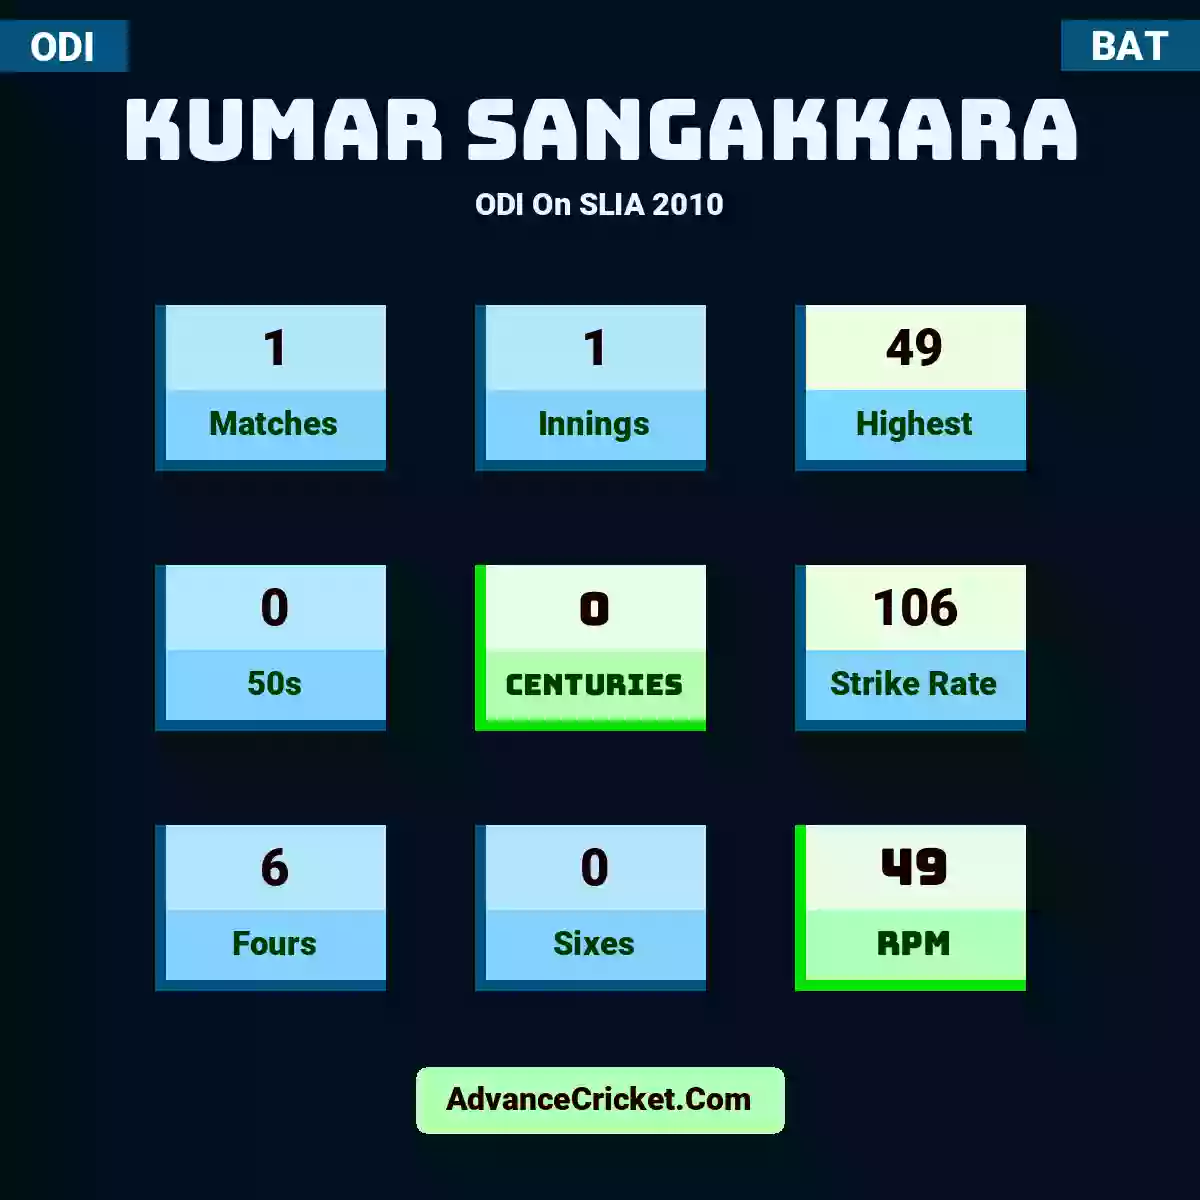 Kumar Sangakkara ODI  On SLIA 2010, Kumar Sangakkara played 1 matches, scored 49 runs as highest, 0 half-centuries, and 0 centuries, with a strike rate of 106. K.Sangakkara hit 6 fours and 0 sixes, with an RPM of 49.